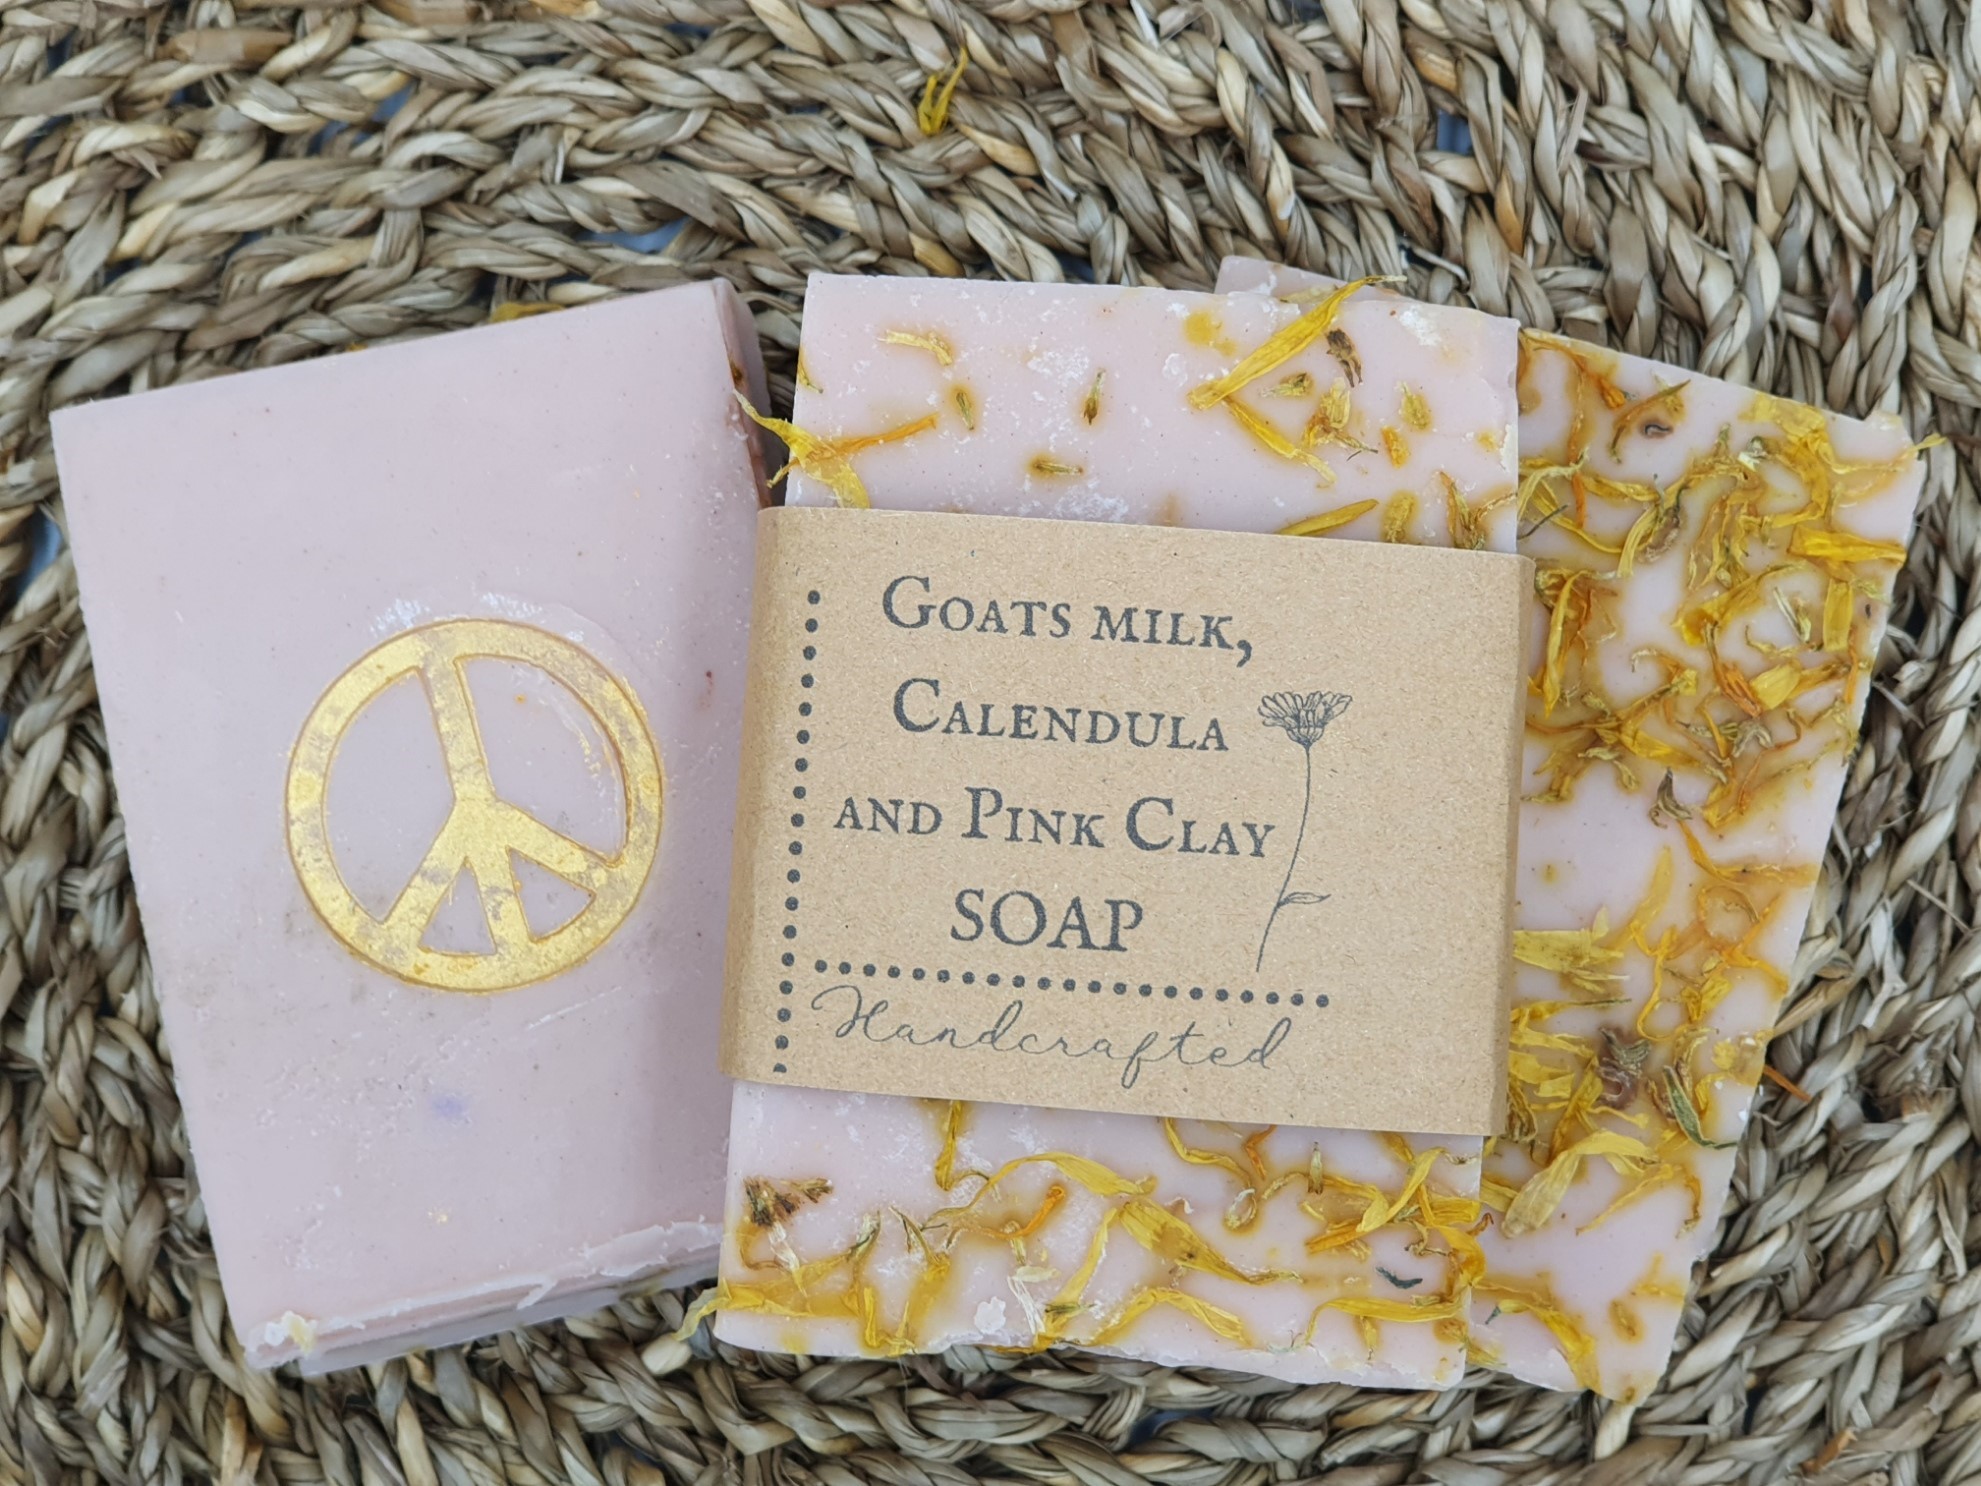 Goats milk, Calendula and Pink clay soap